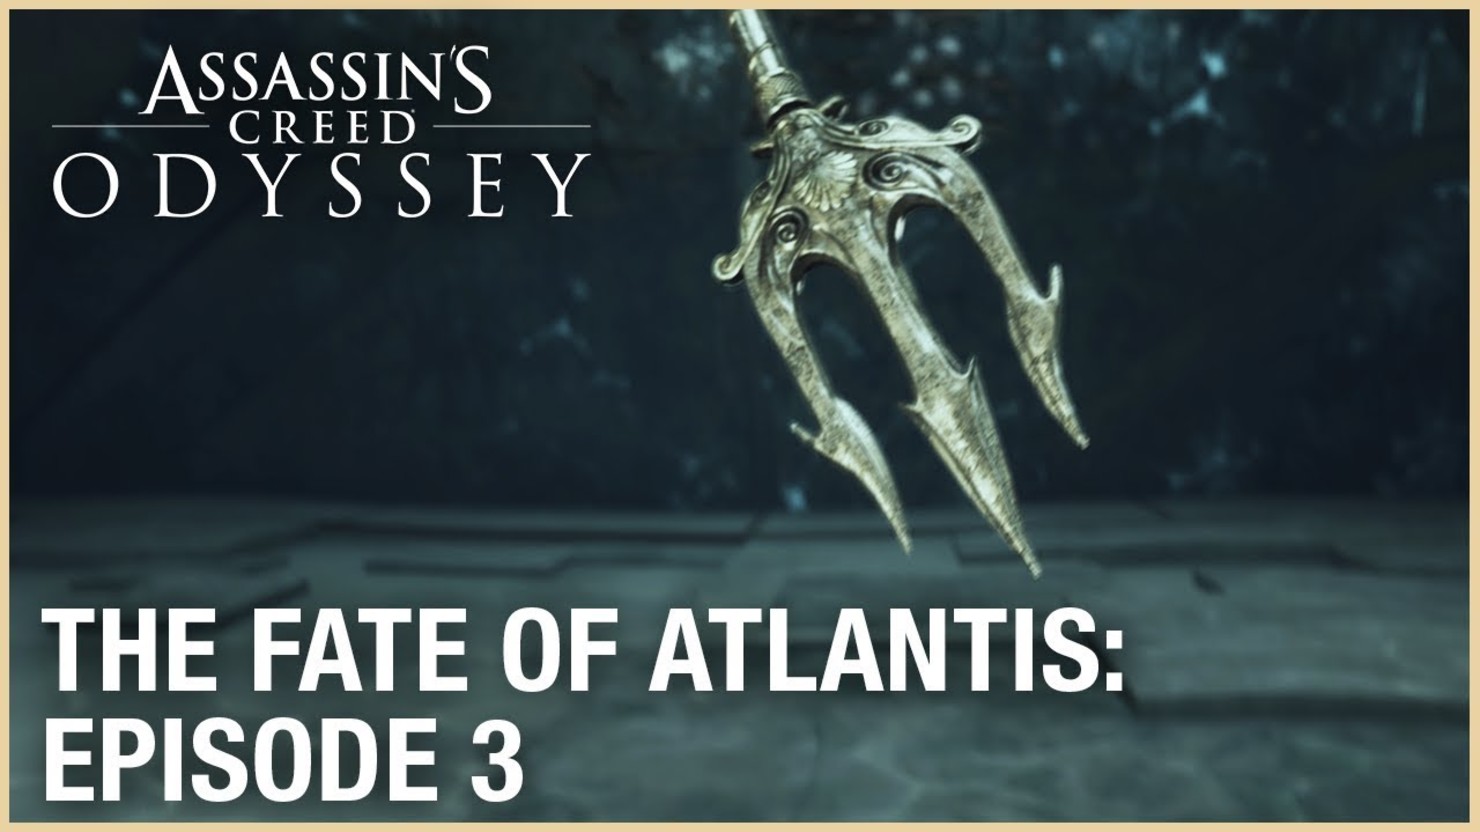 The fate of atlantis